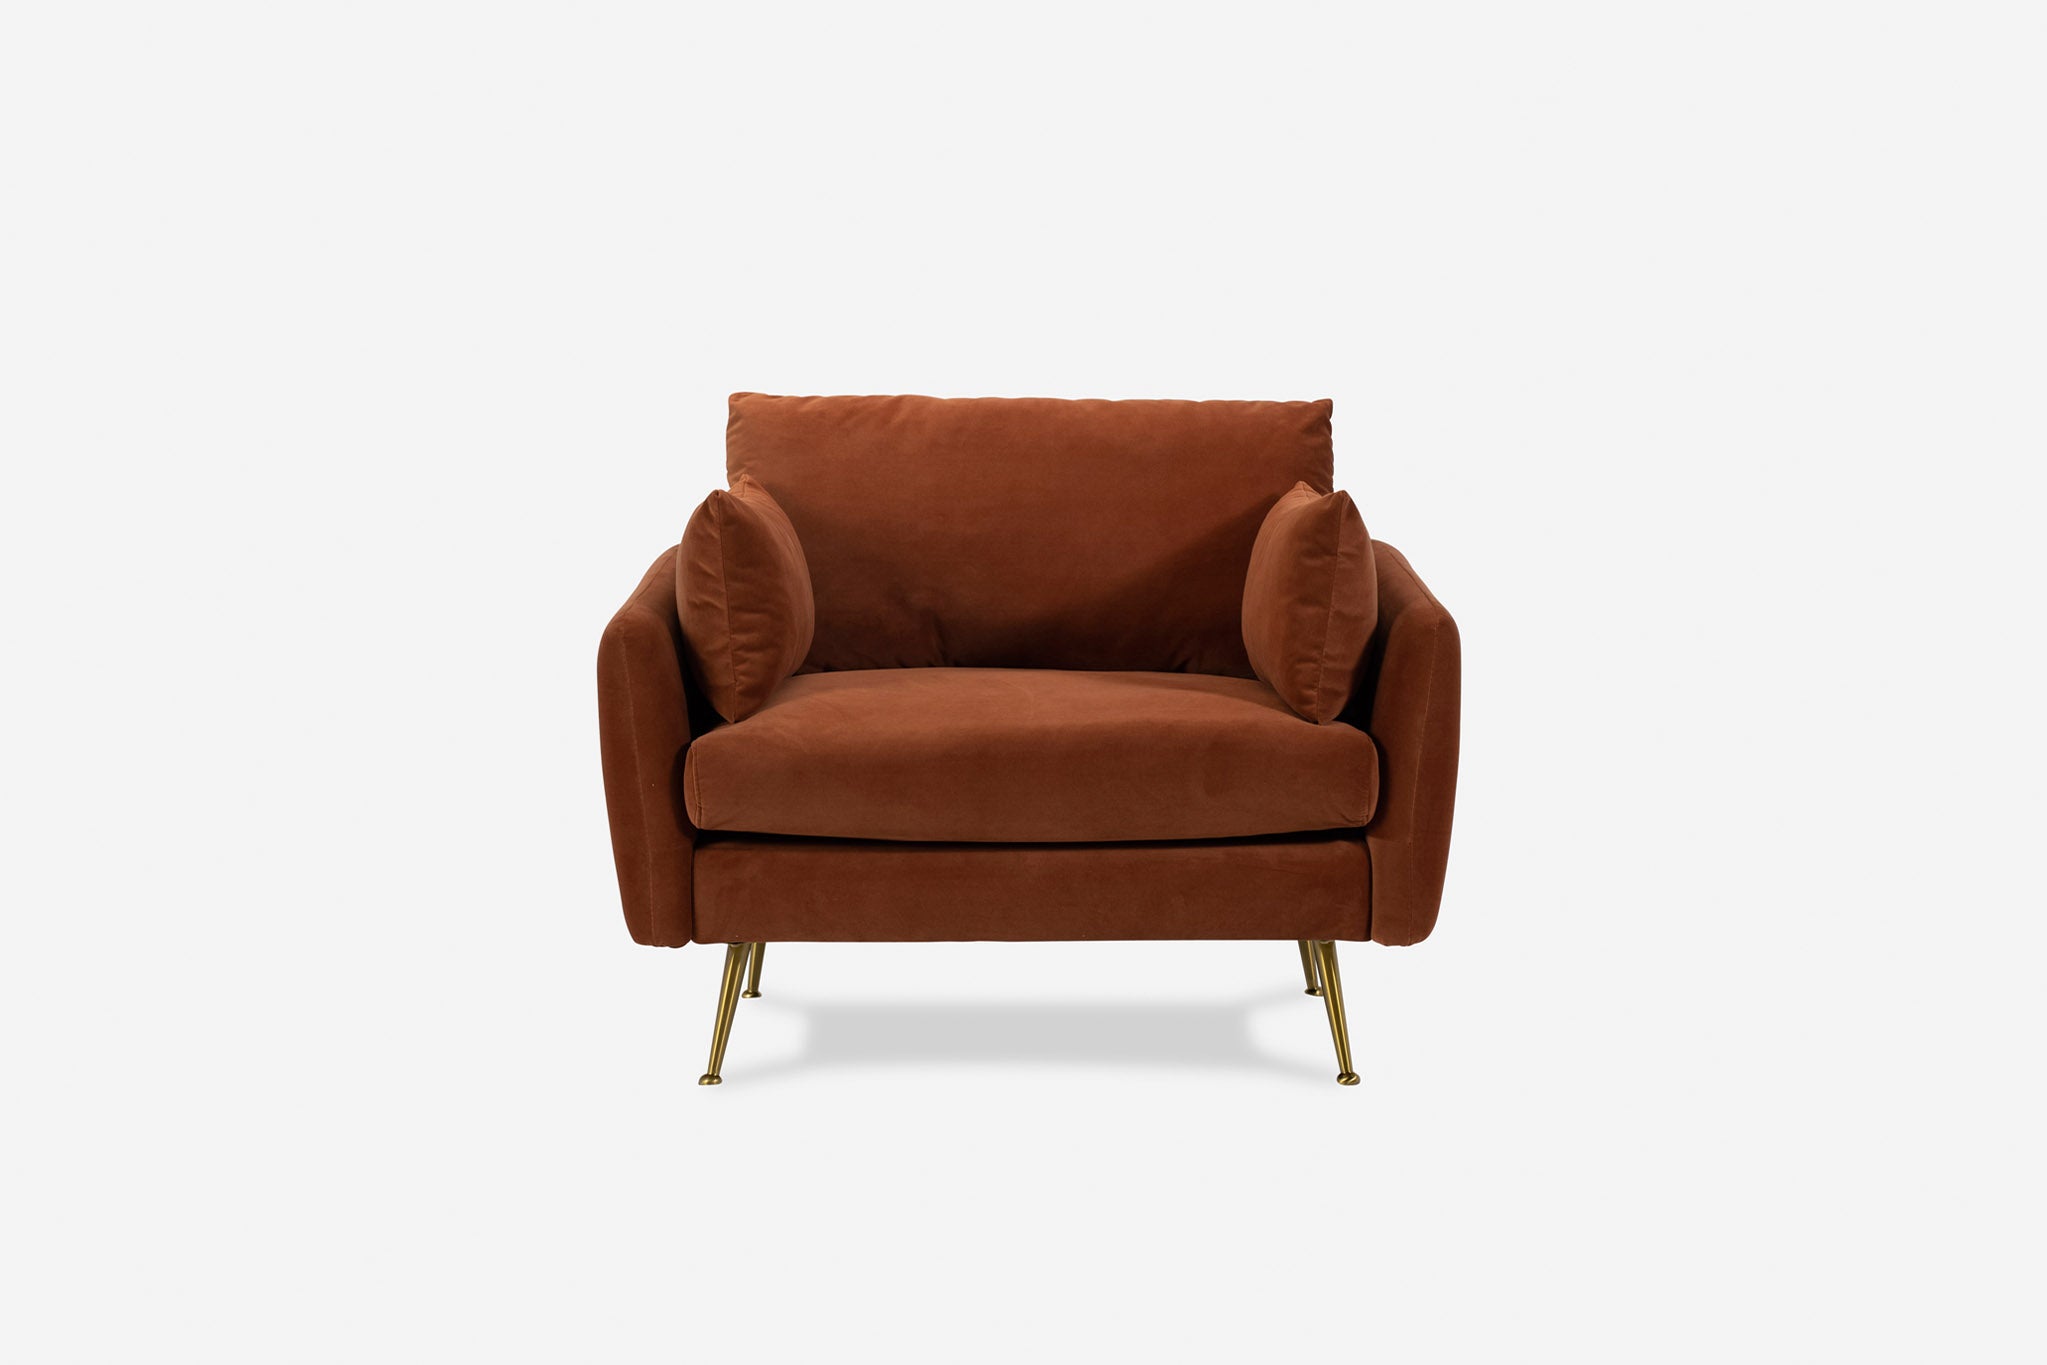 park armchair shown in rust velvet with gold legs